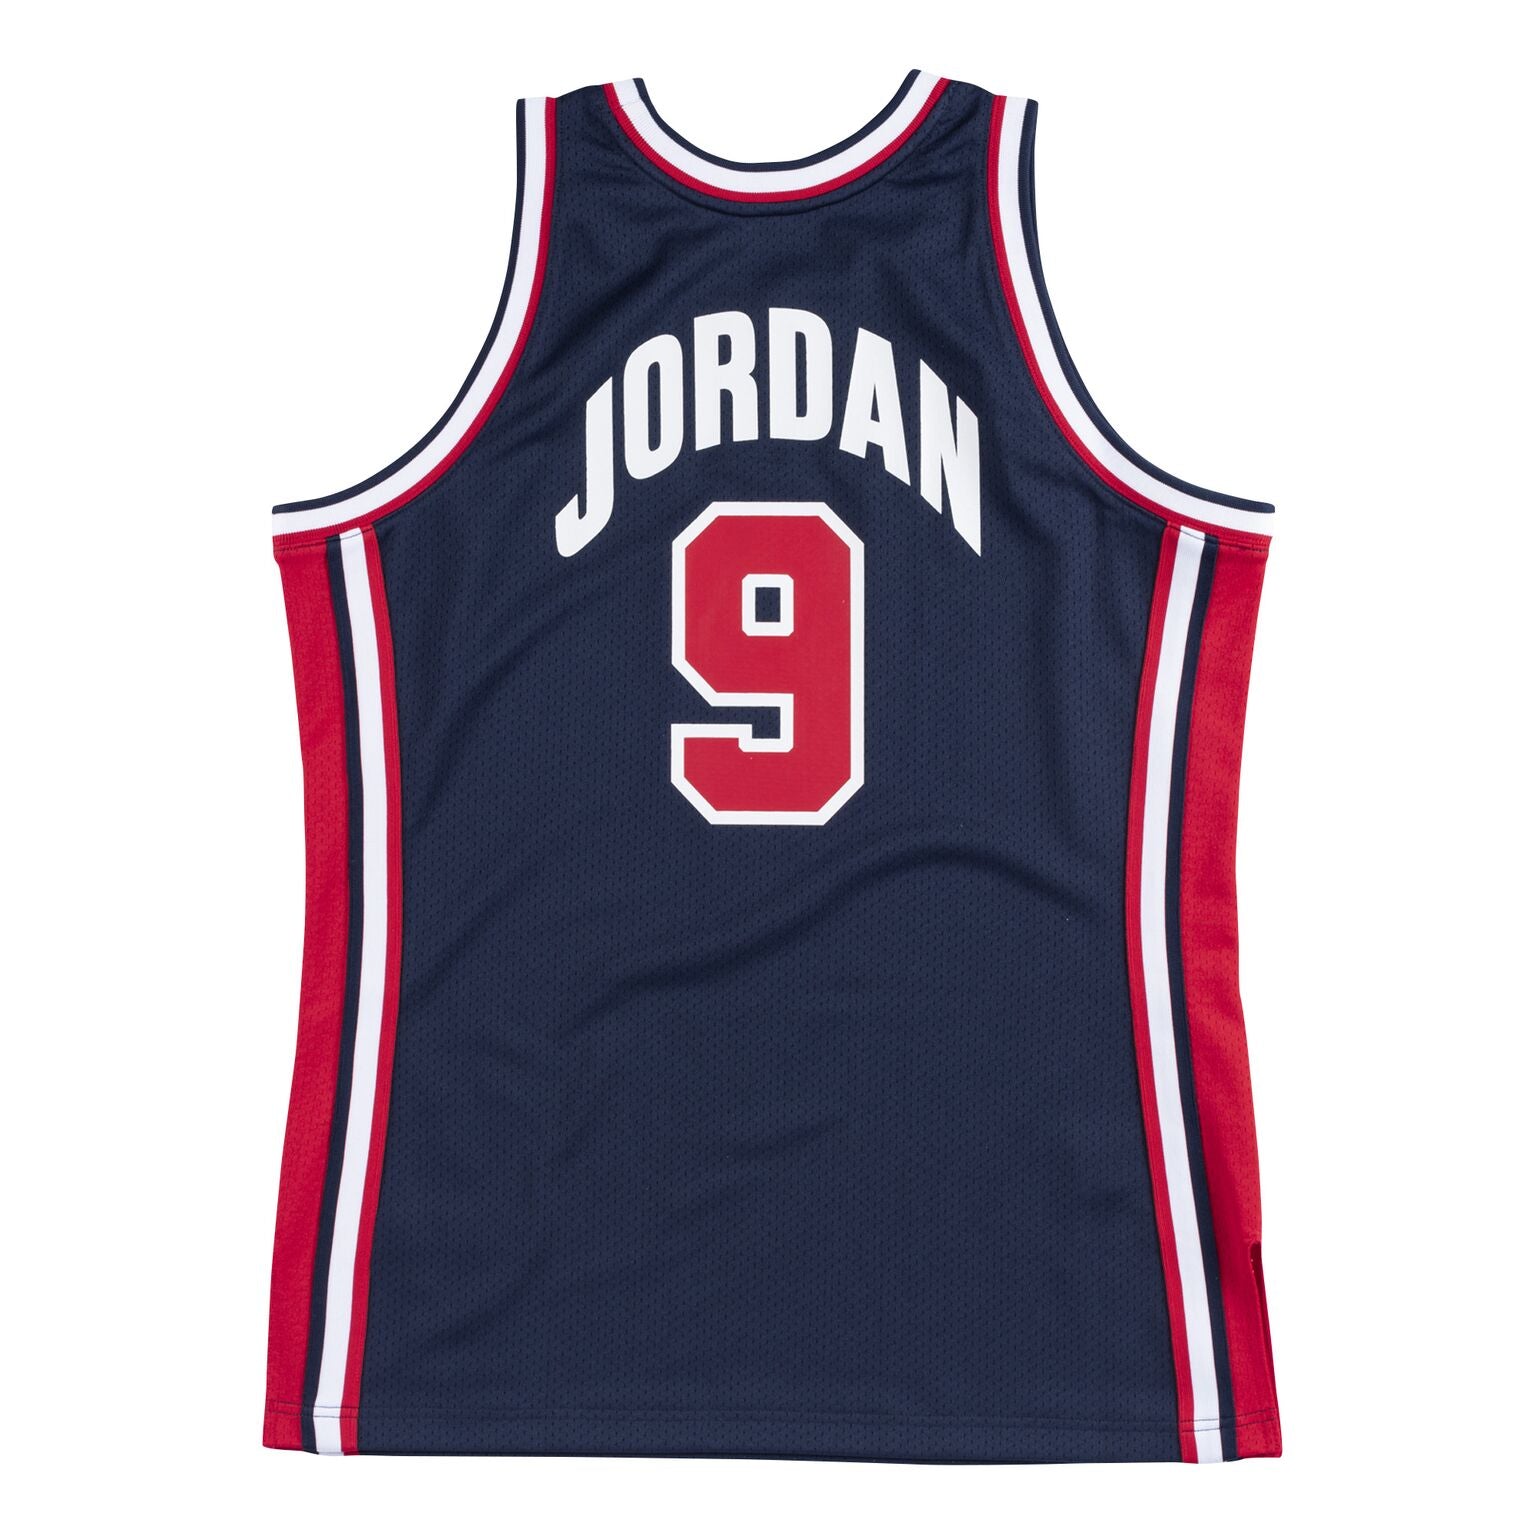 jordan dream team jersey